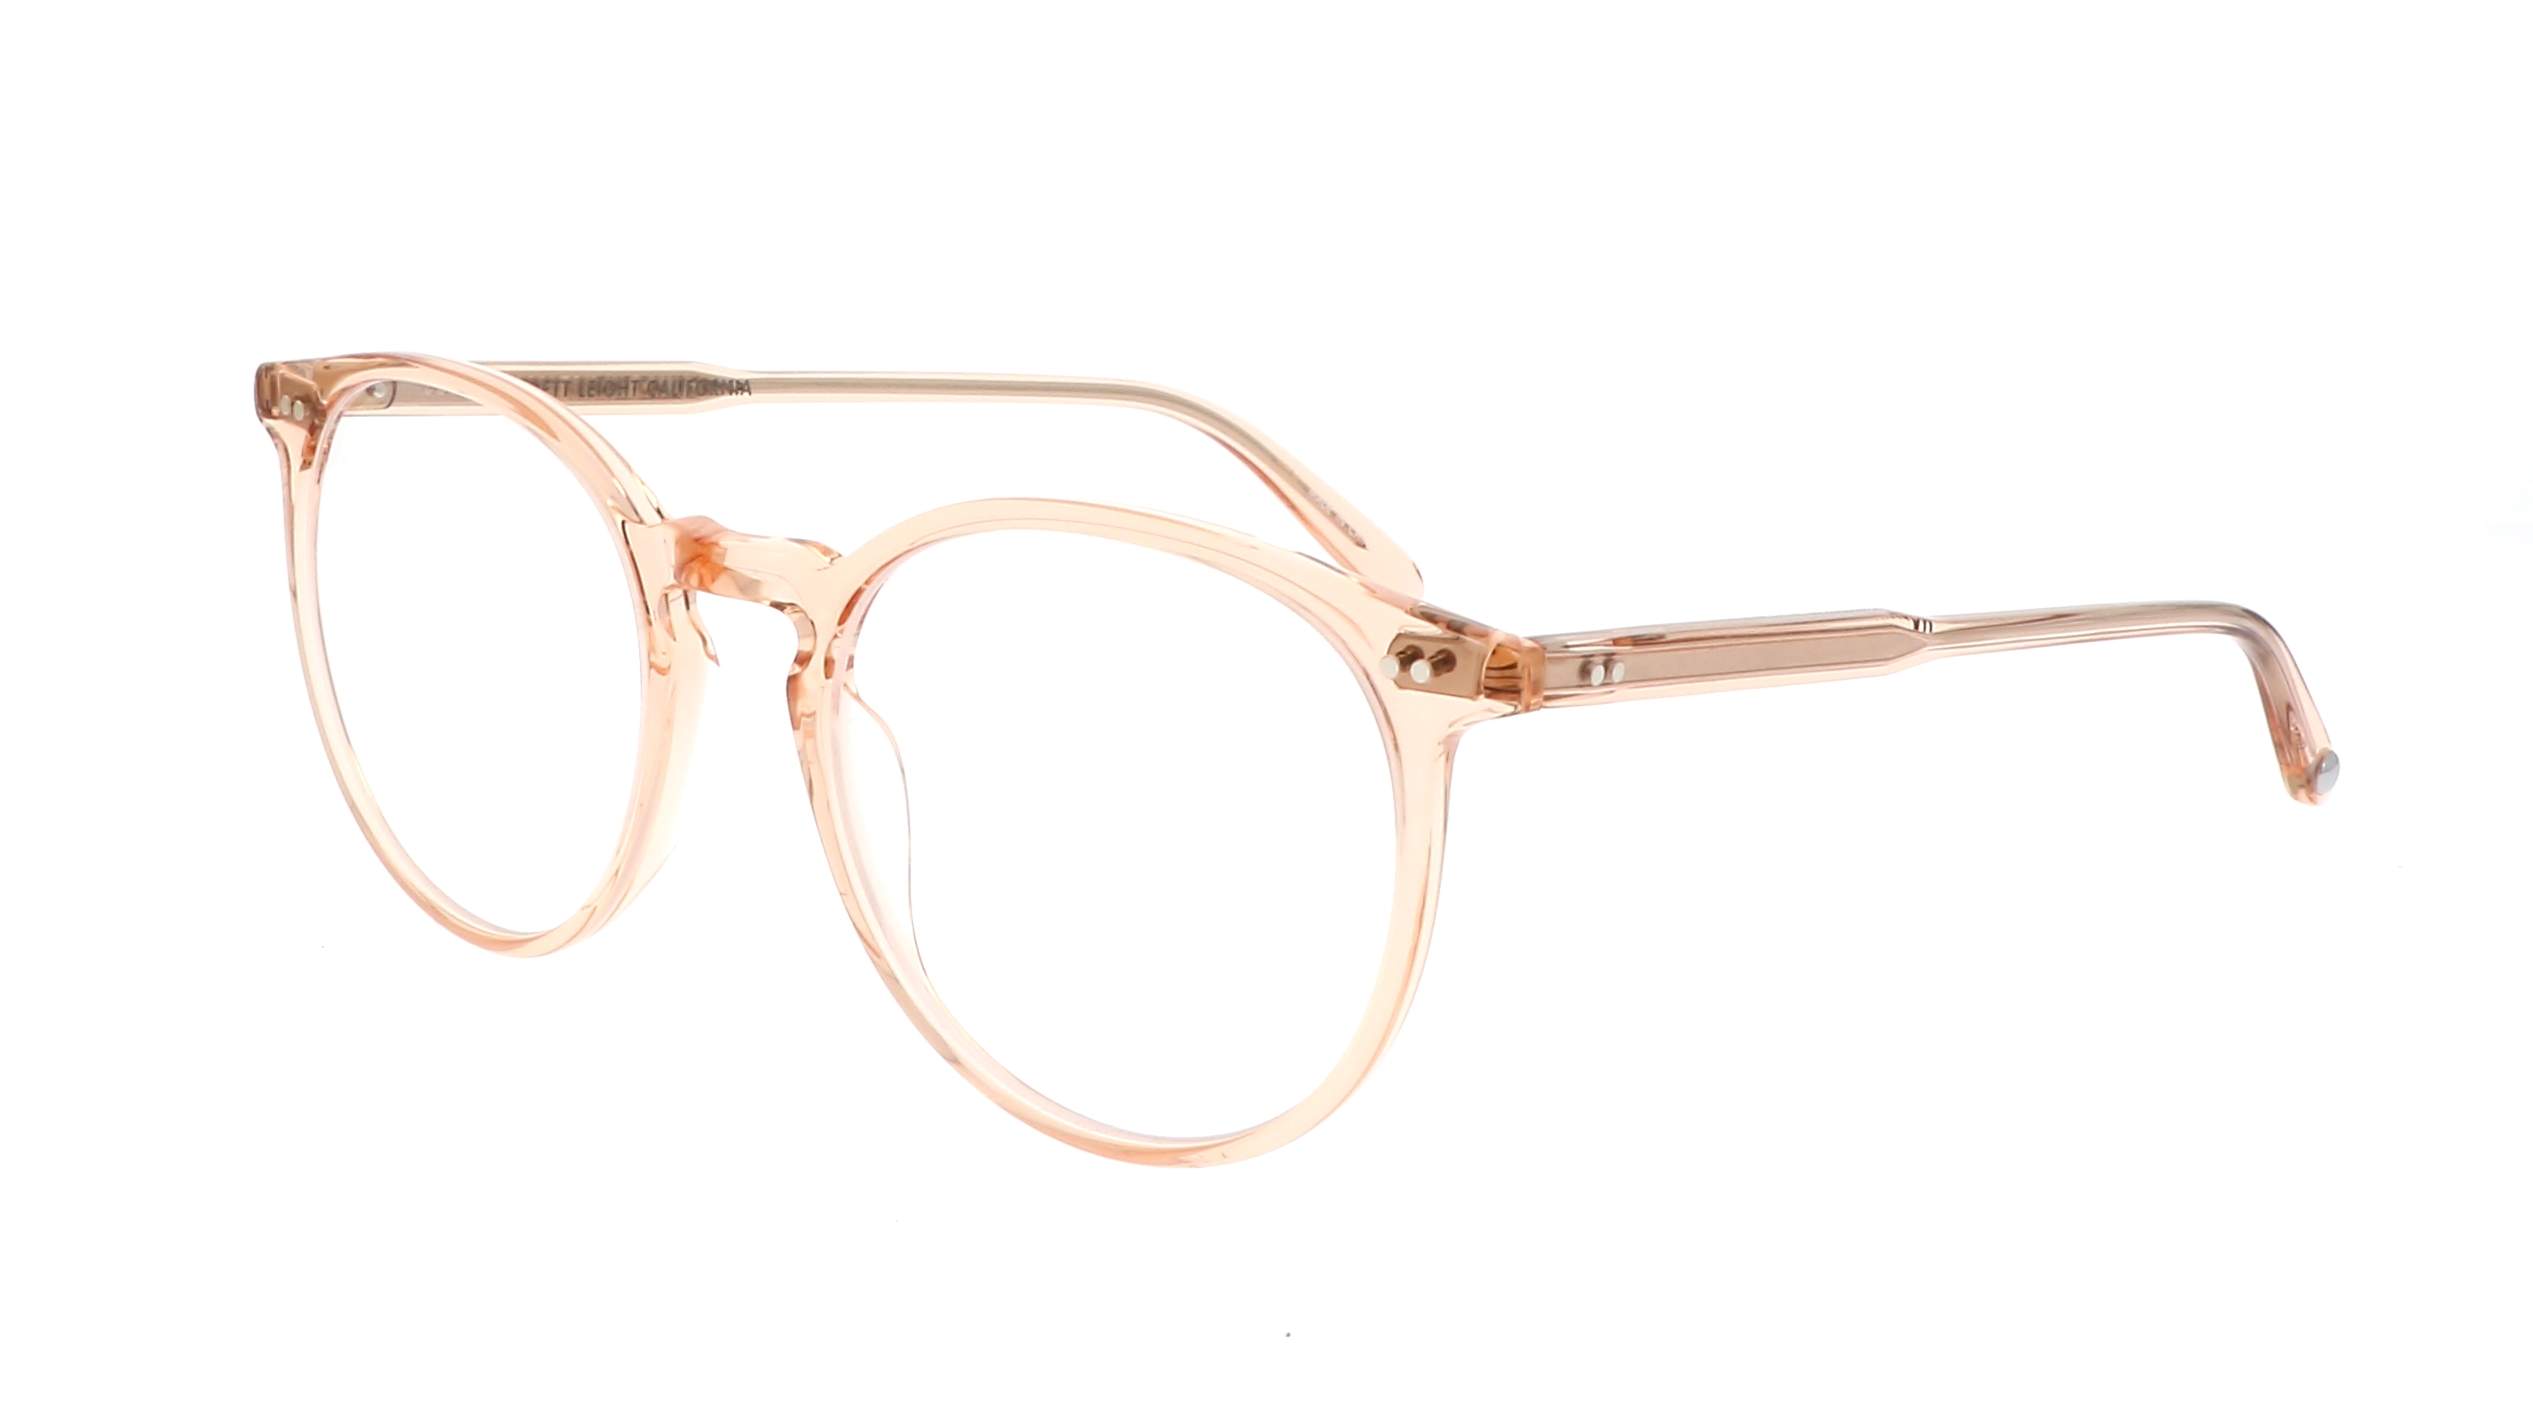 Eyeglasses Garrett Leight Morningside 1076 Pcy 51 21 Clear Pink Crystal In Stock Price 225 00